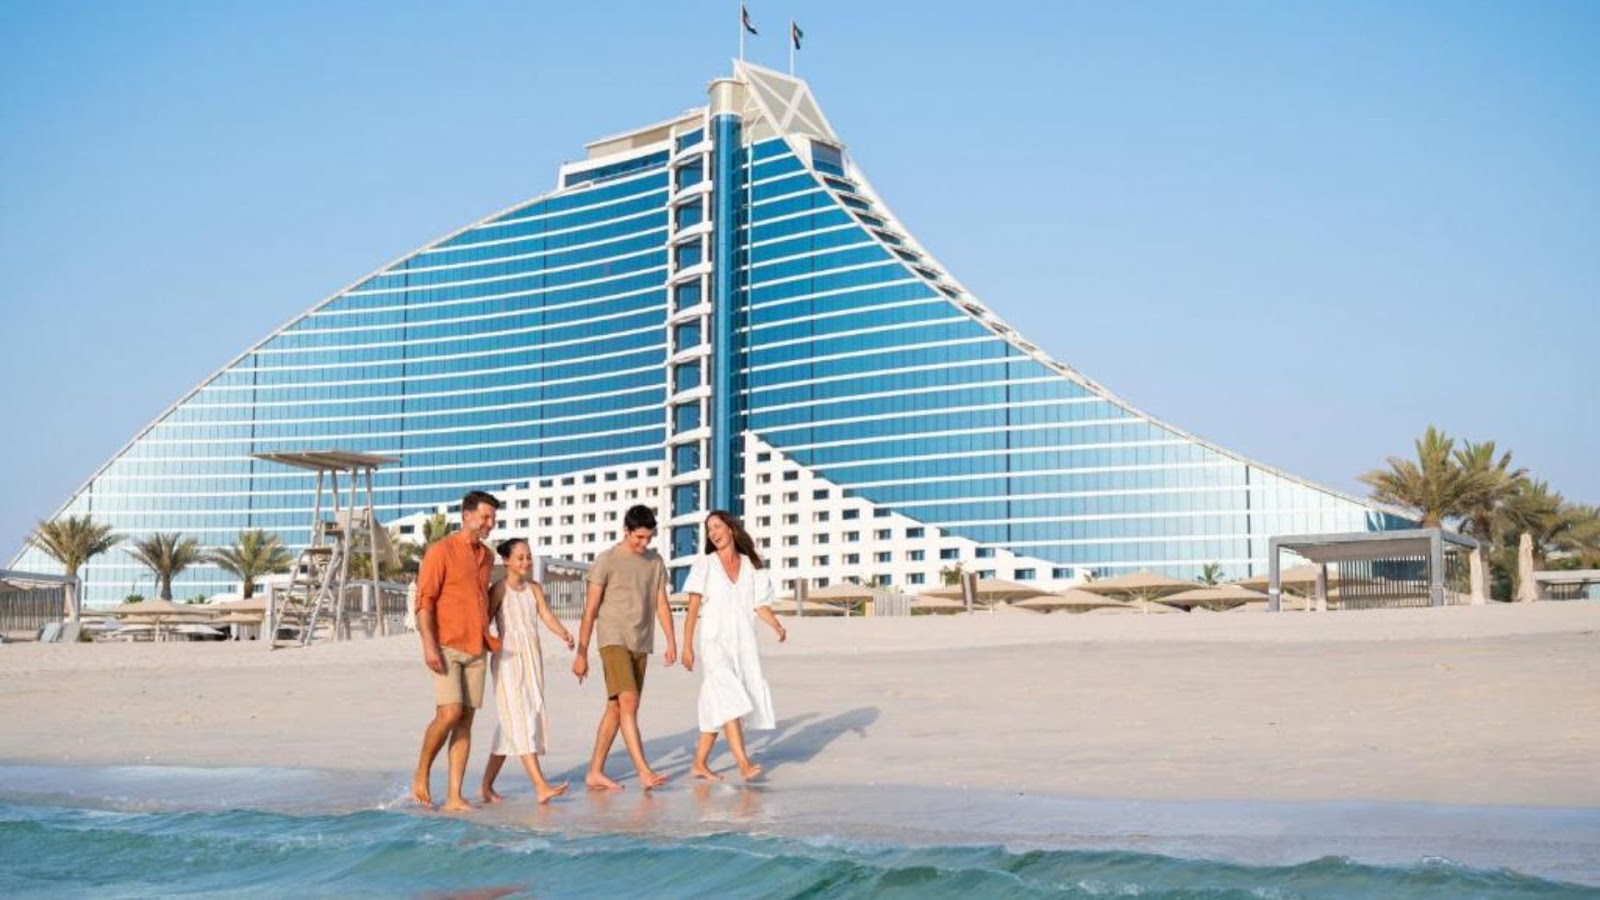 Jumeirah Beach Hotel: UAE famous buildings.